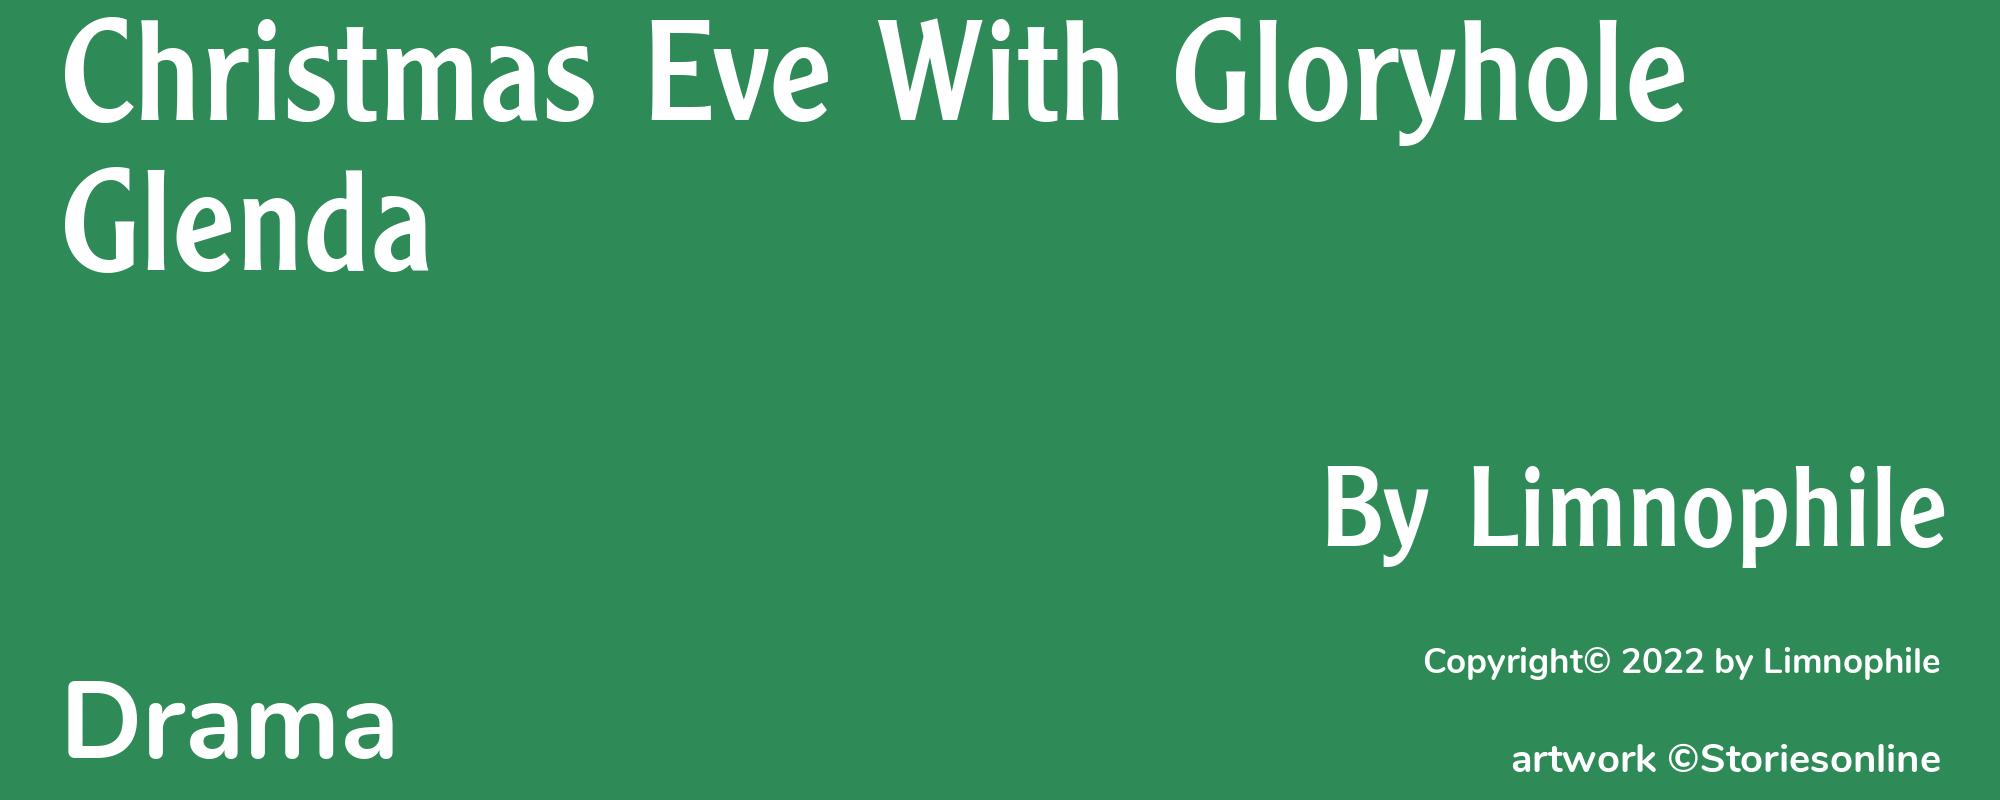 Christmas Eve With Gloryhole Glenda - Cover